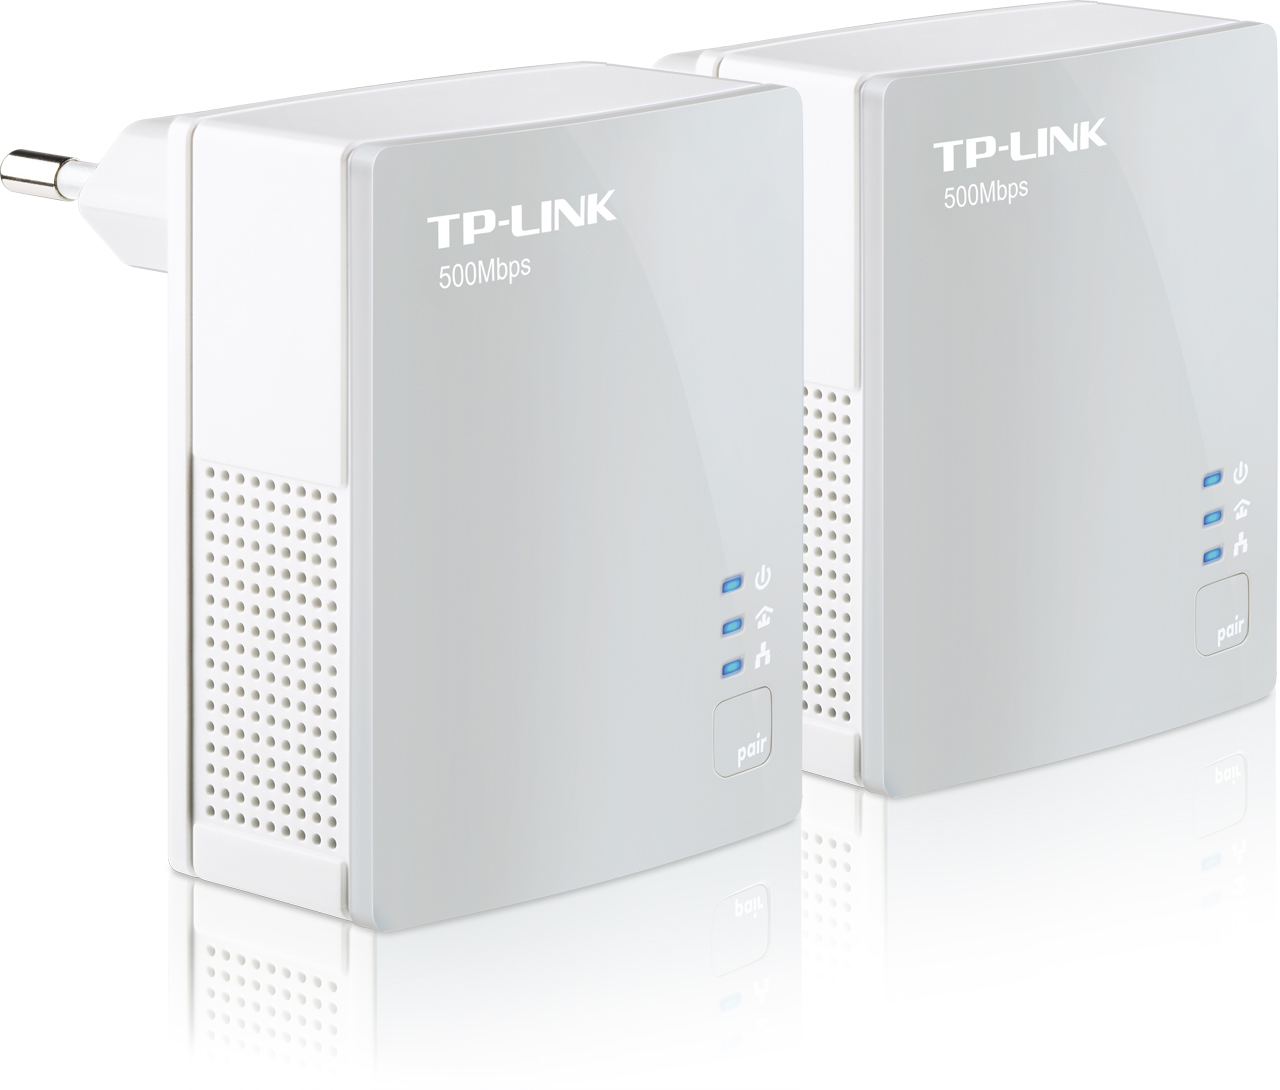 TP-LINK TL-PA4010KIT POWERLINE 600Mbps